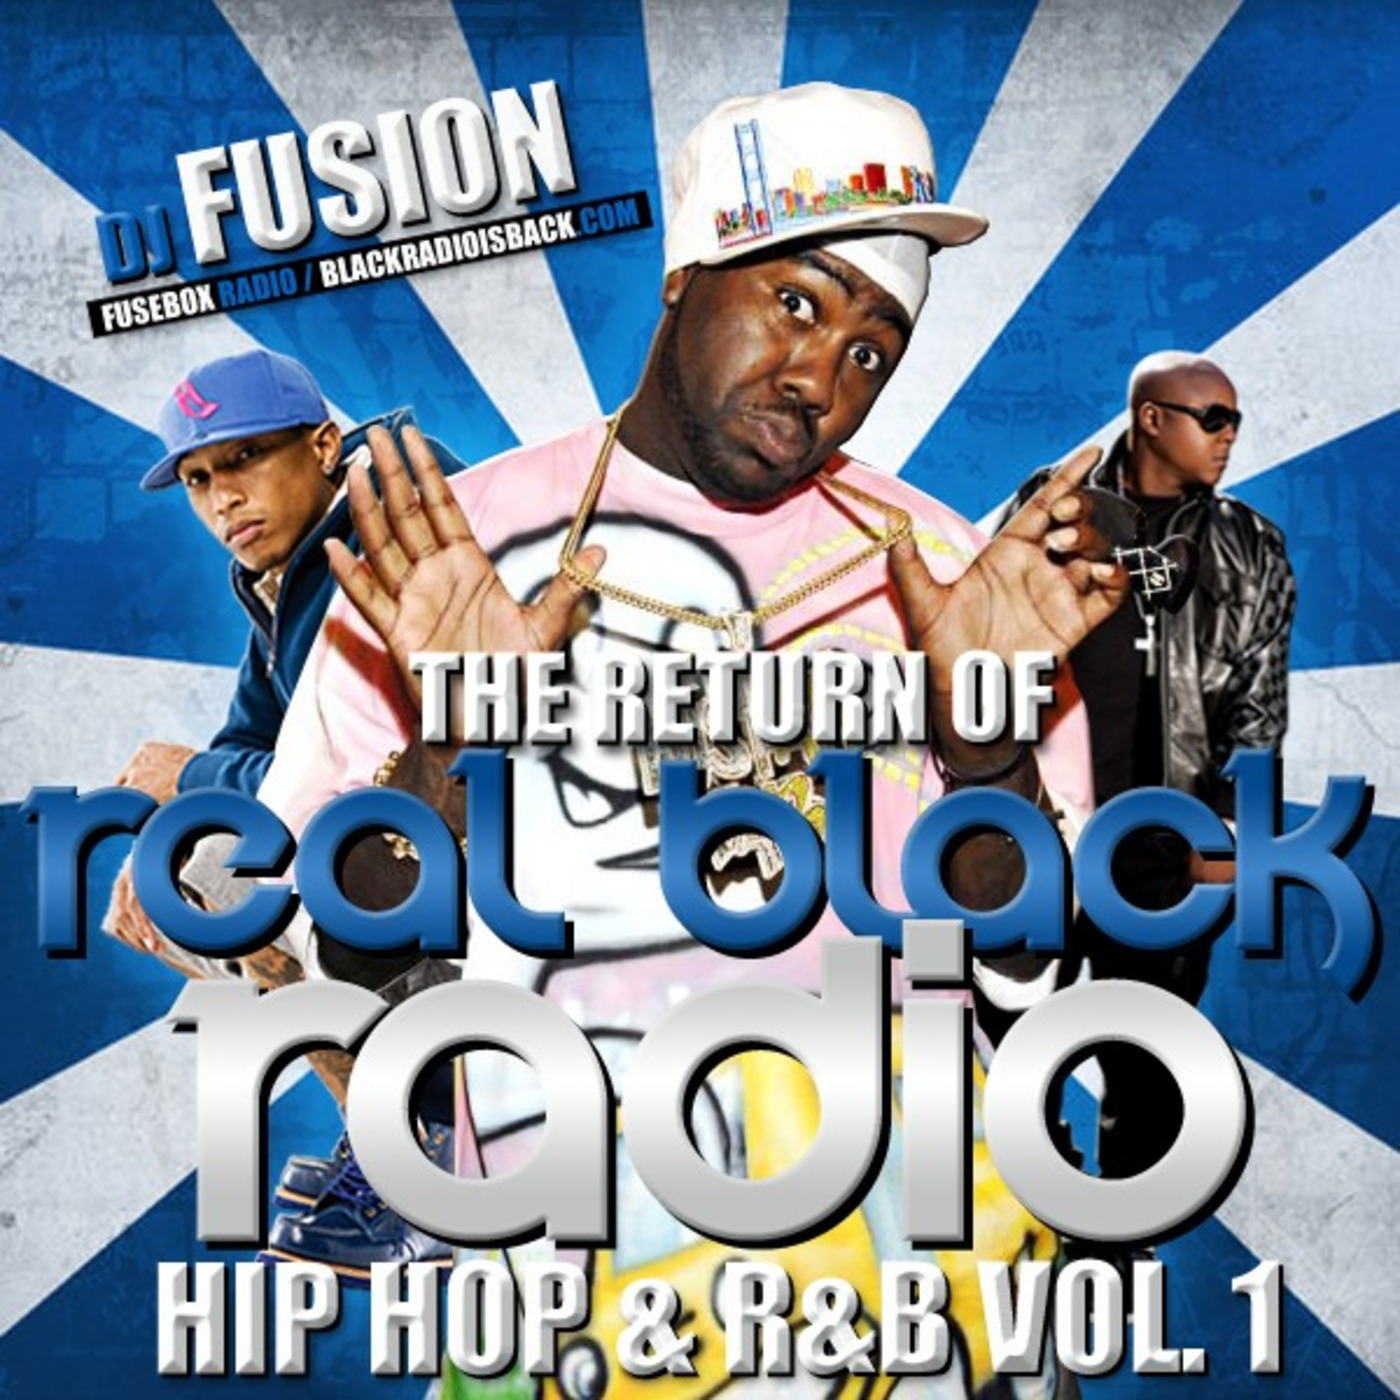 FuseBox Radio #519: Return of Real Black Radio Vol. 1 by DJ Fusion [FLASHBACK EPISODE: Week of March 15, 2017]